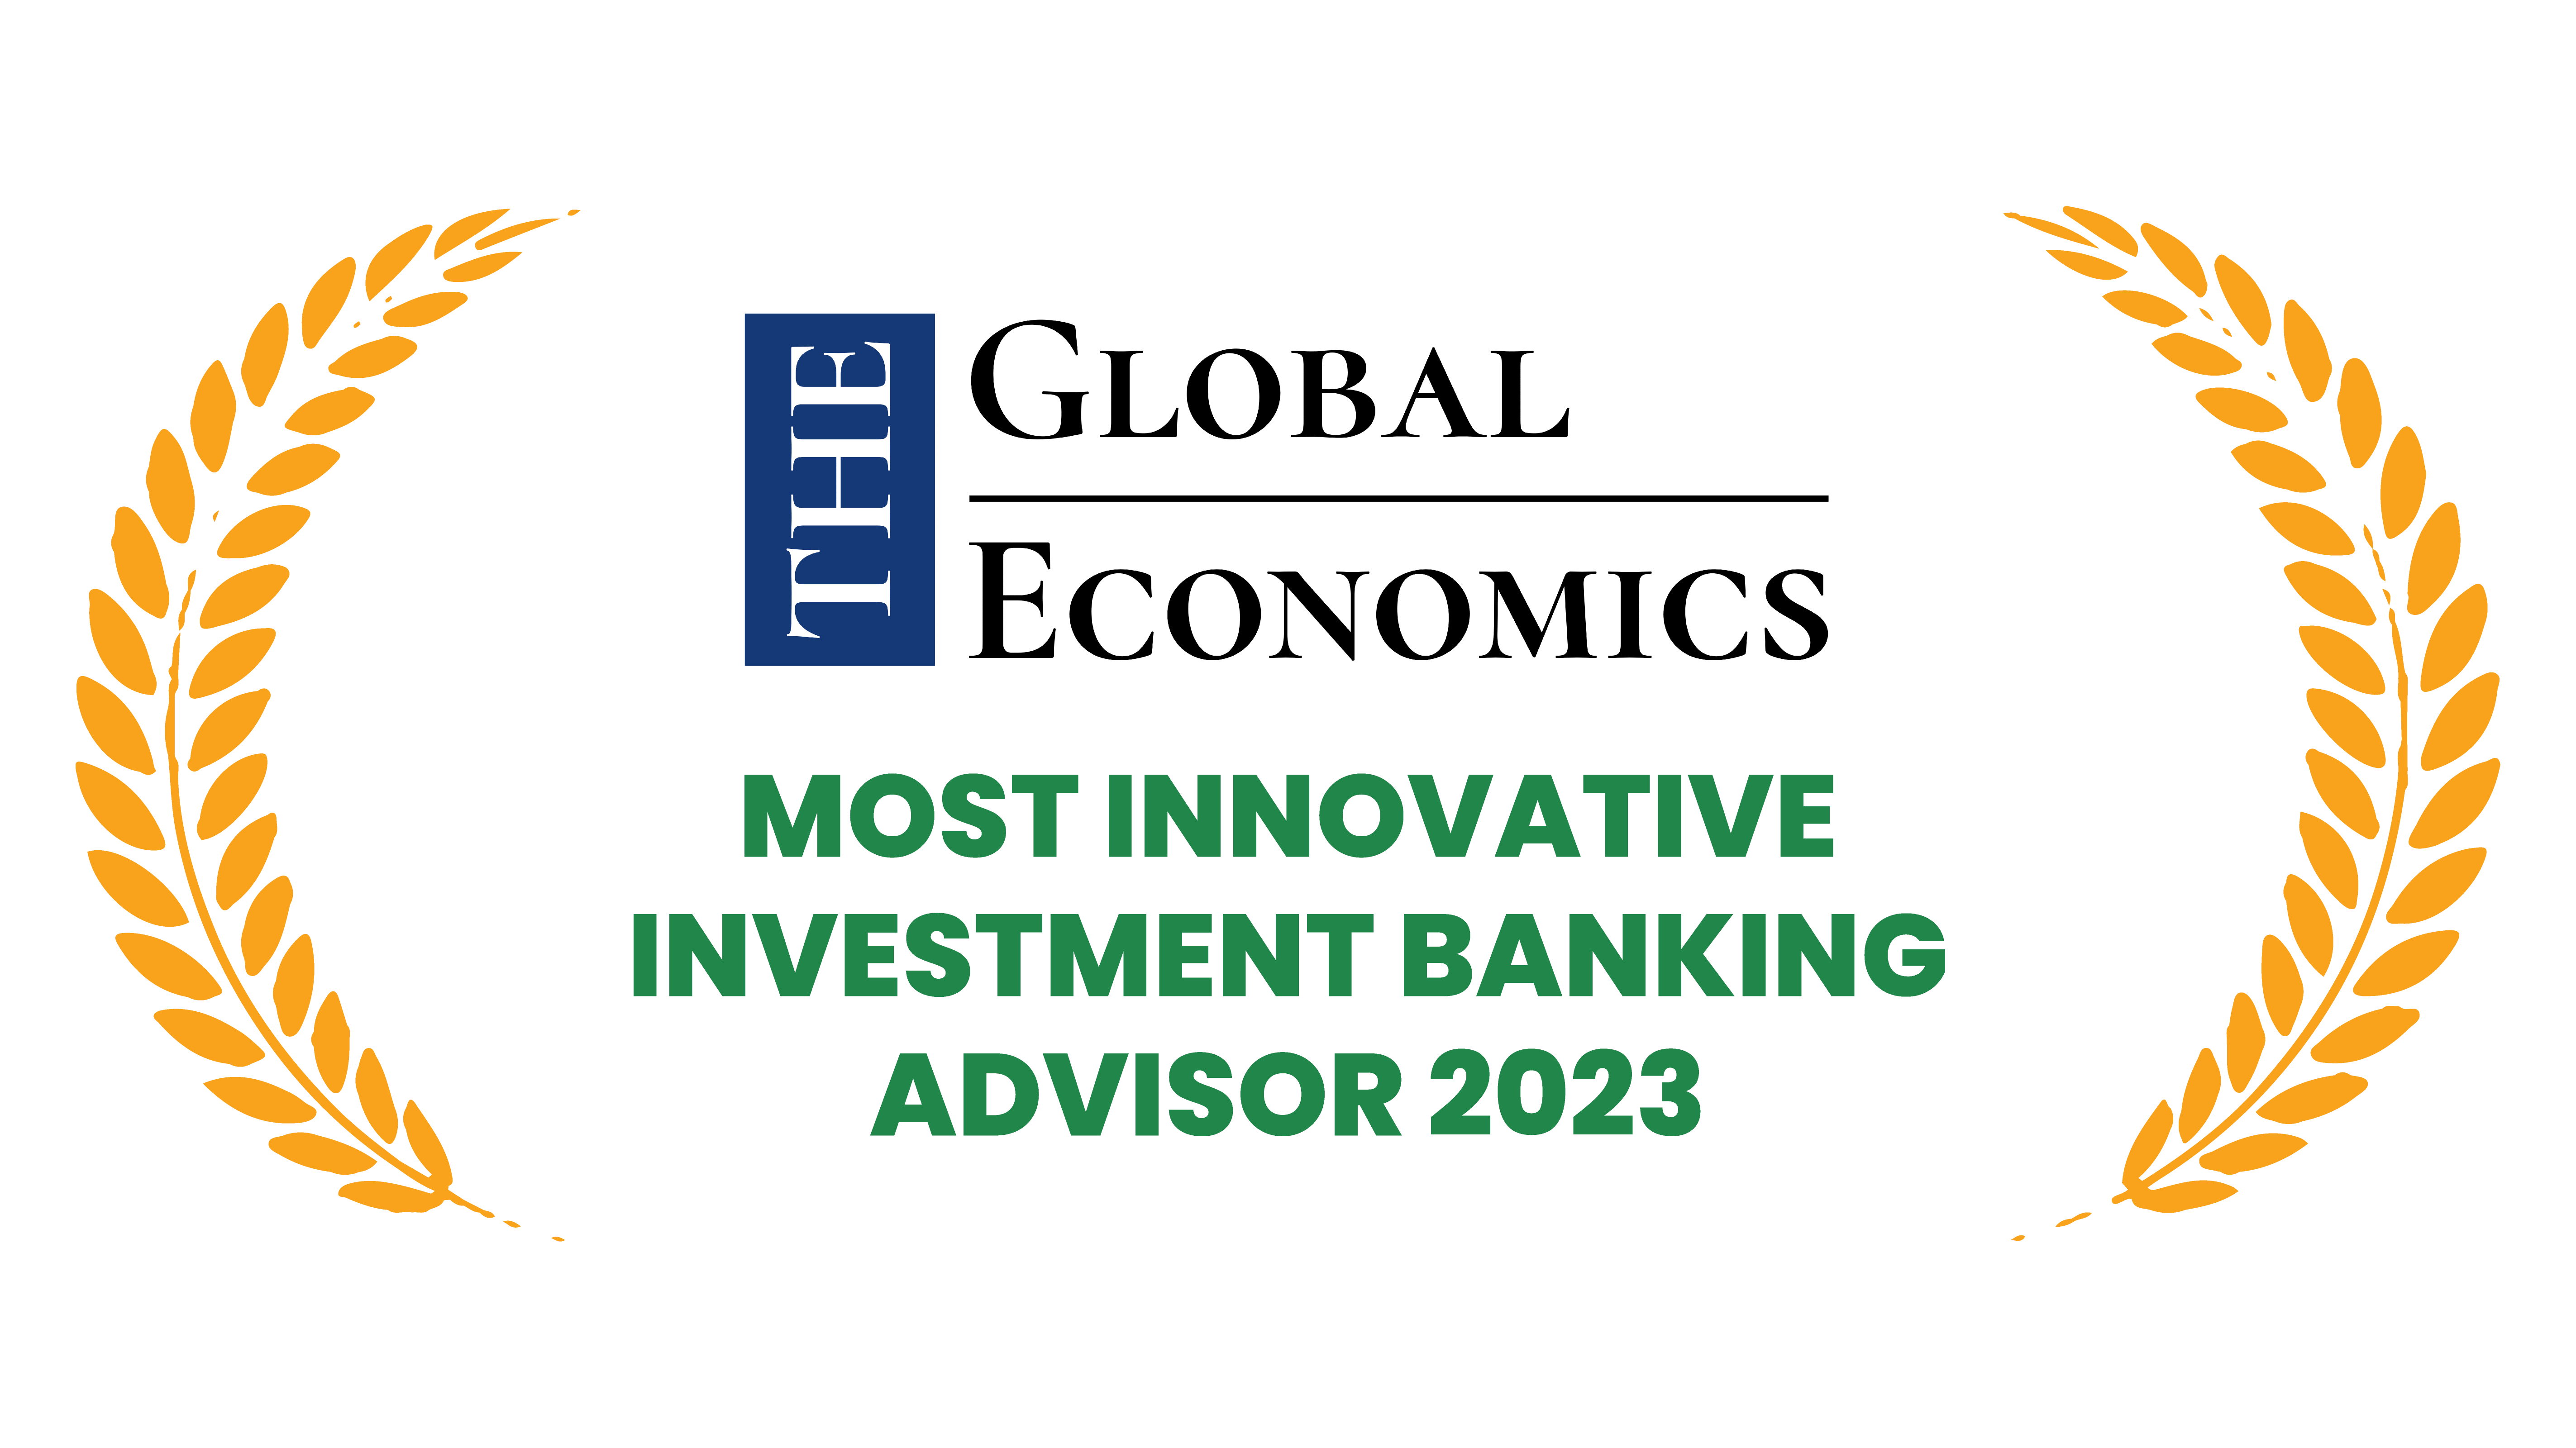 The Global Economics - Most Innovative Investment Banking Advisor 2023